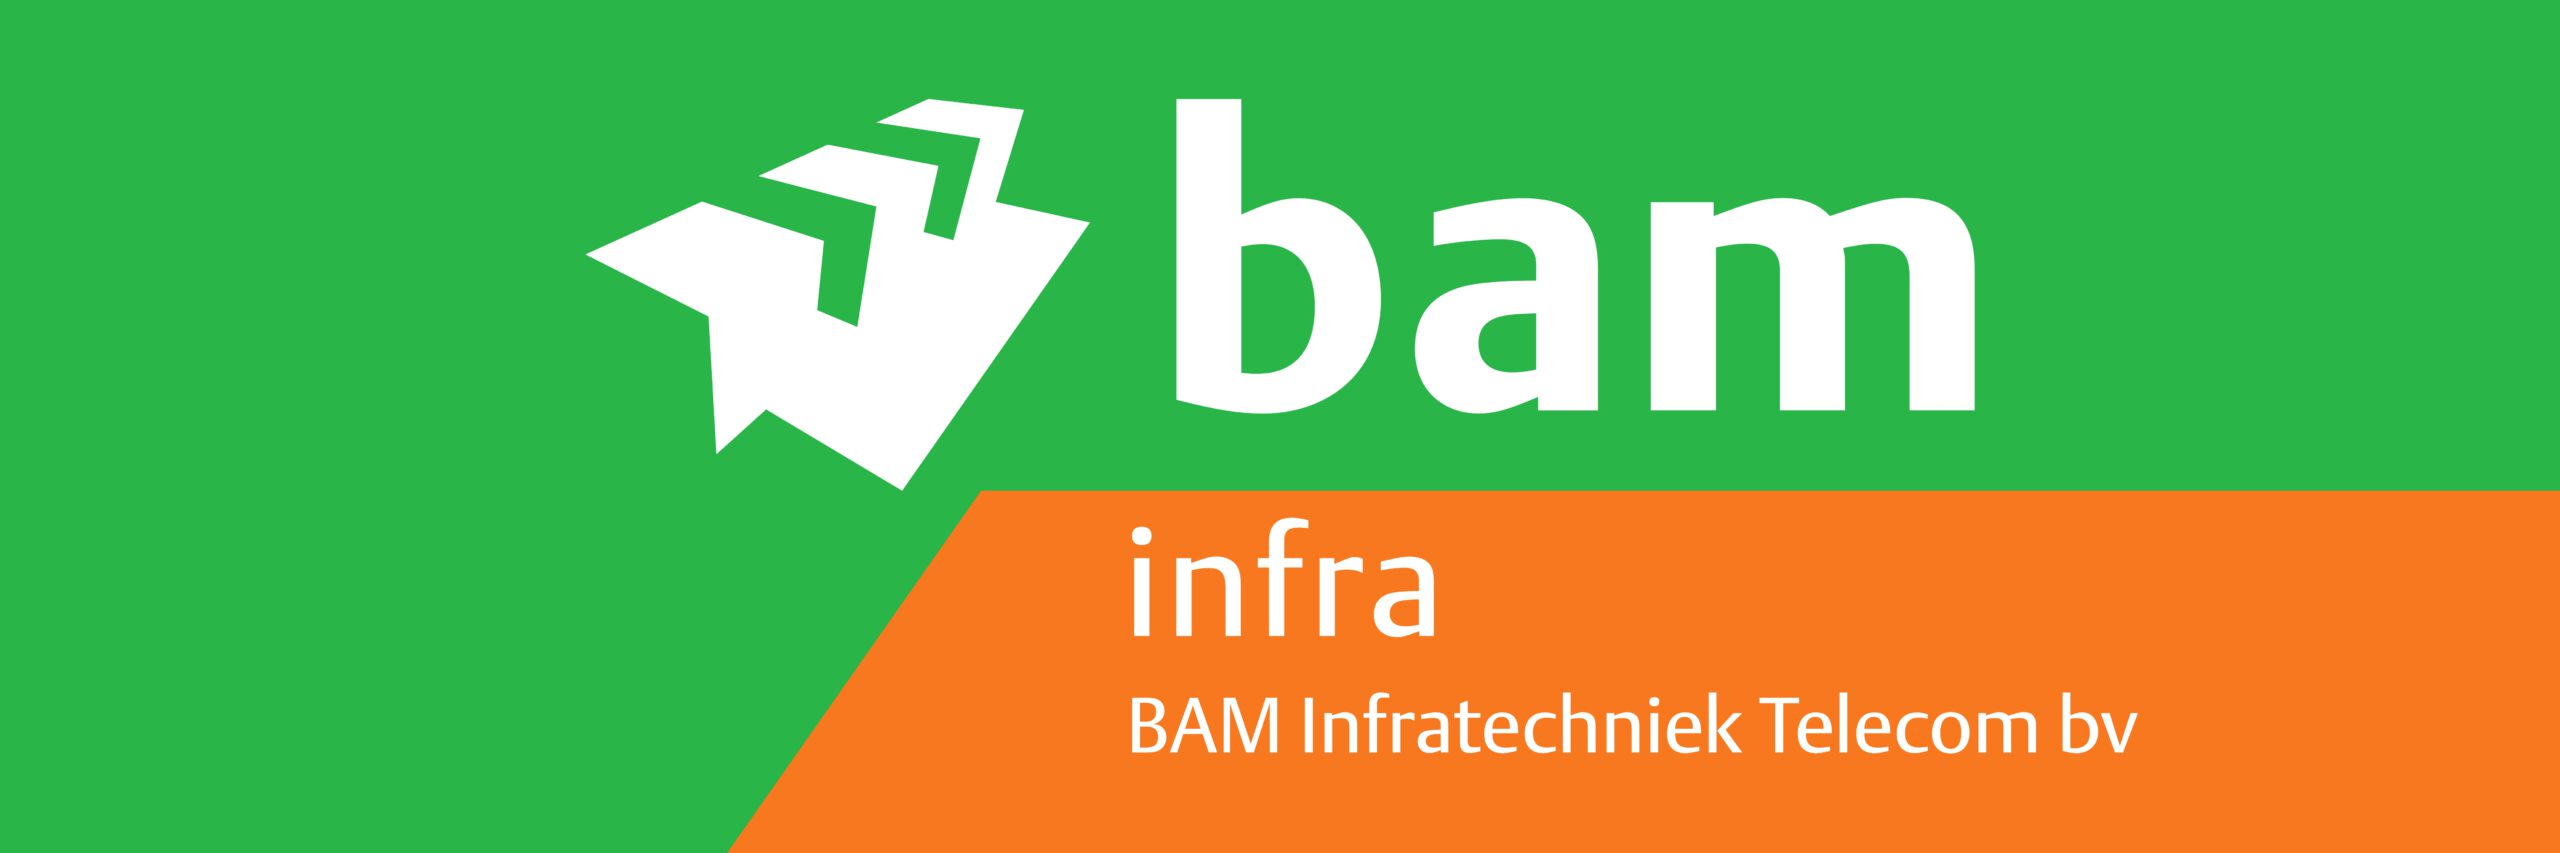 BAM Infra Telecom 150x50_pages-to-jpg-0001